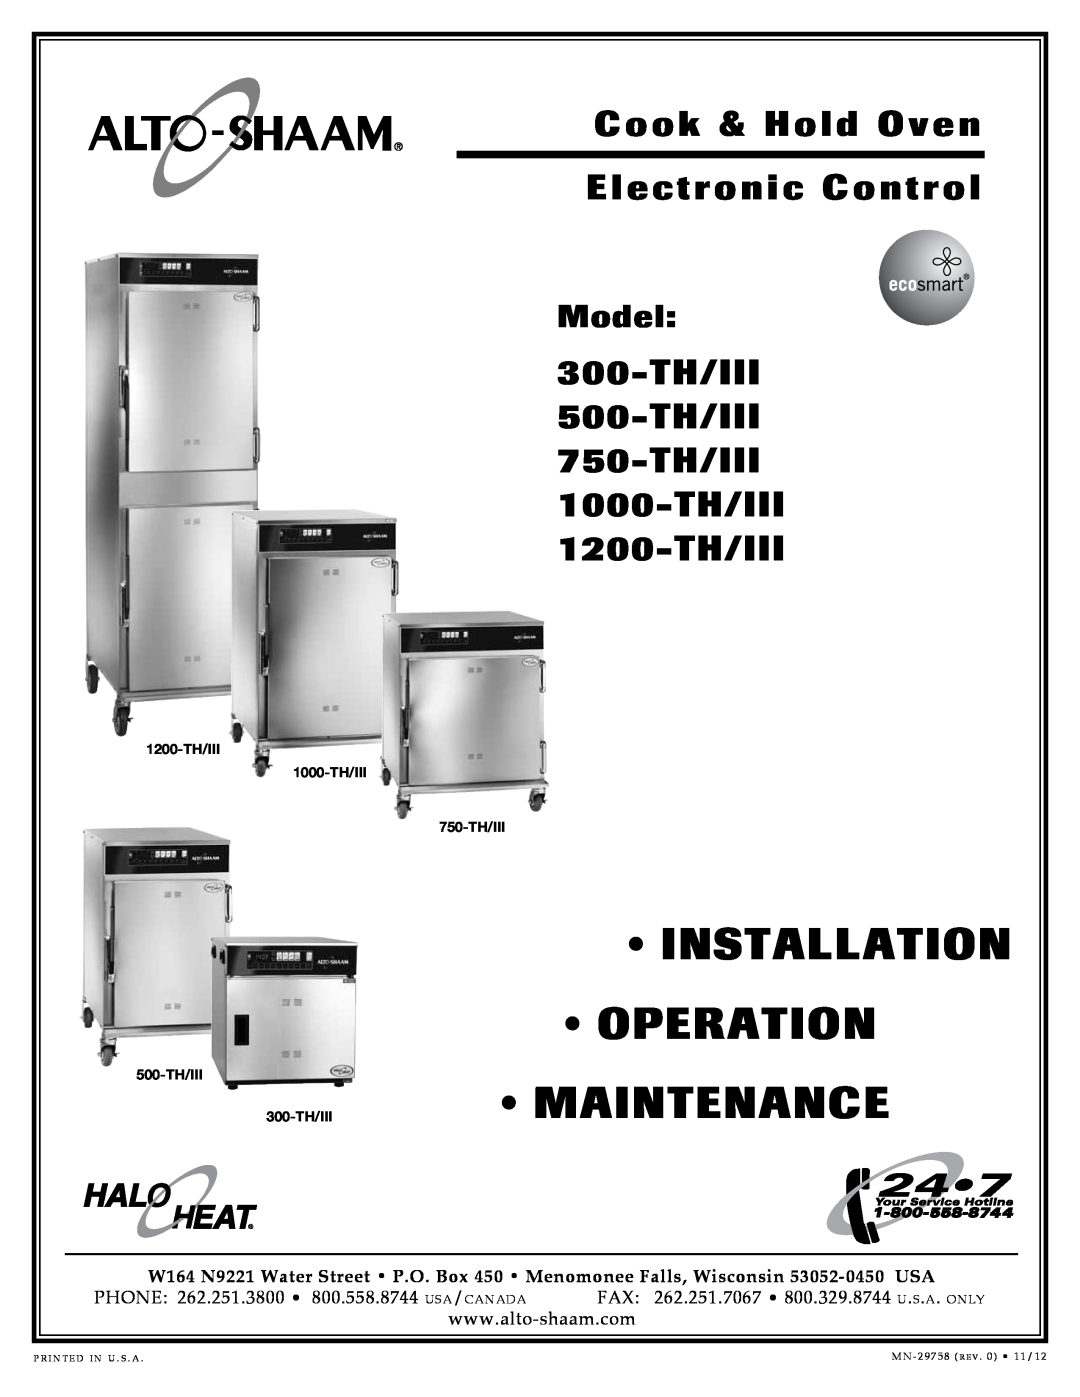 Alto-Shaam 500-TH/III, 1000-TH/III, 750-TH/III, 1200-TH/III, 767-SK/III manual Installation, Operation, Maintenance 